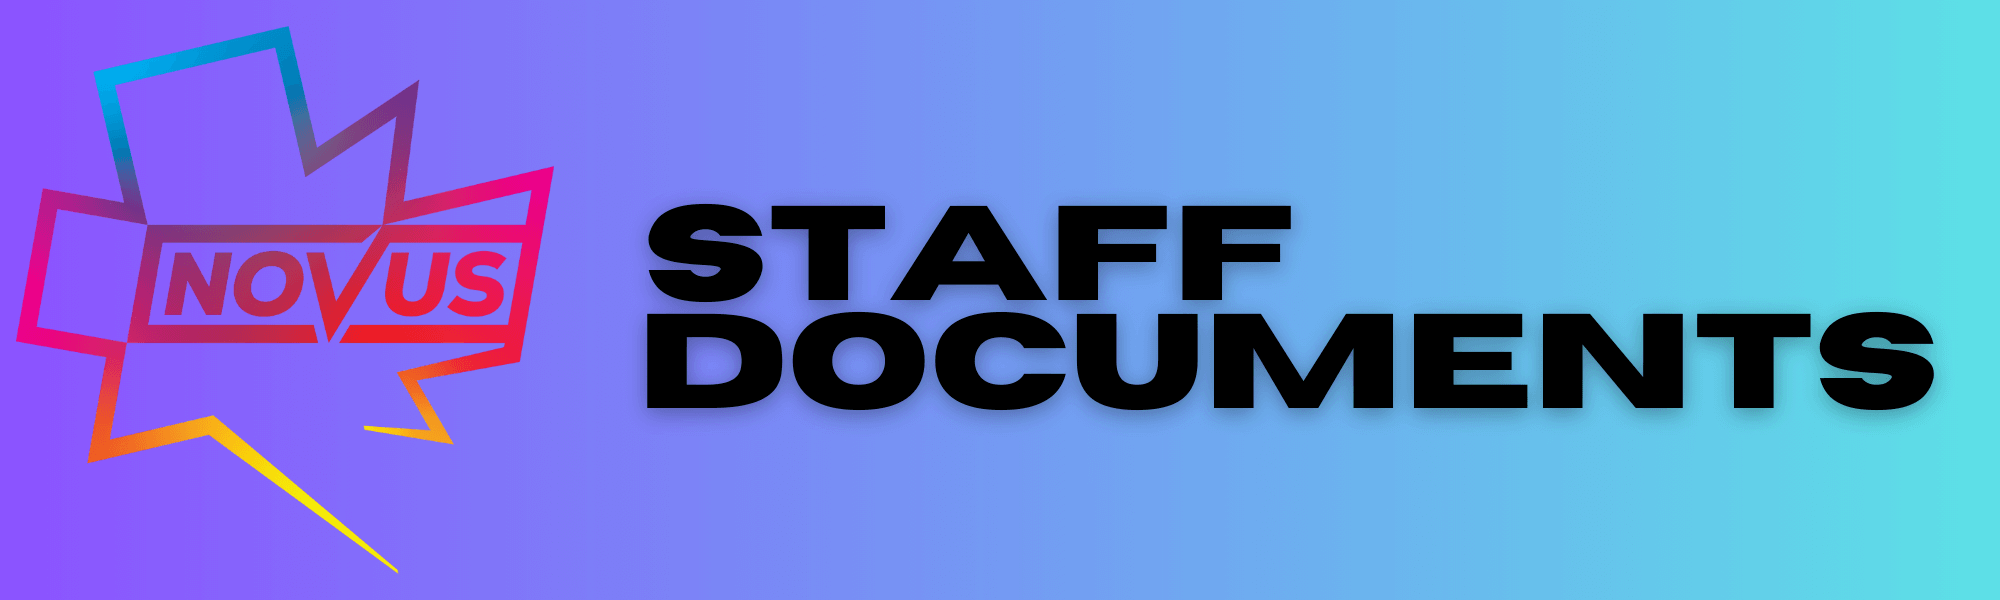 Novus Staff Documents